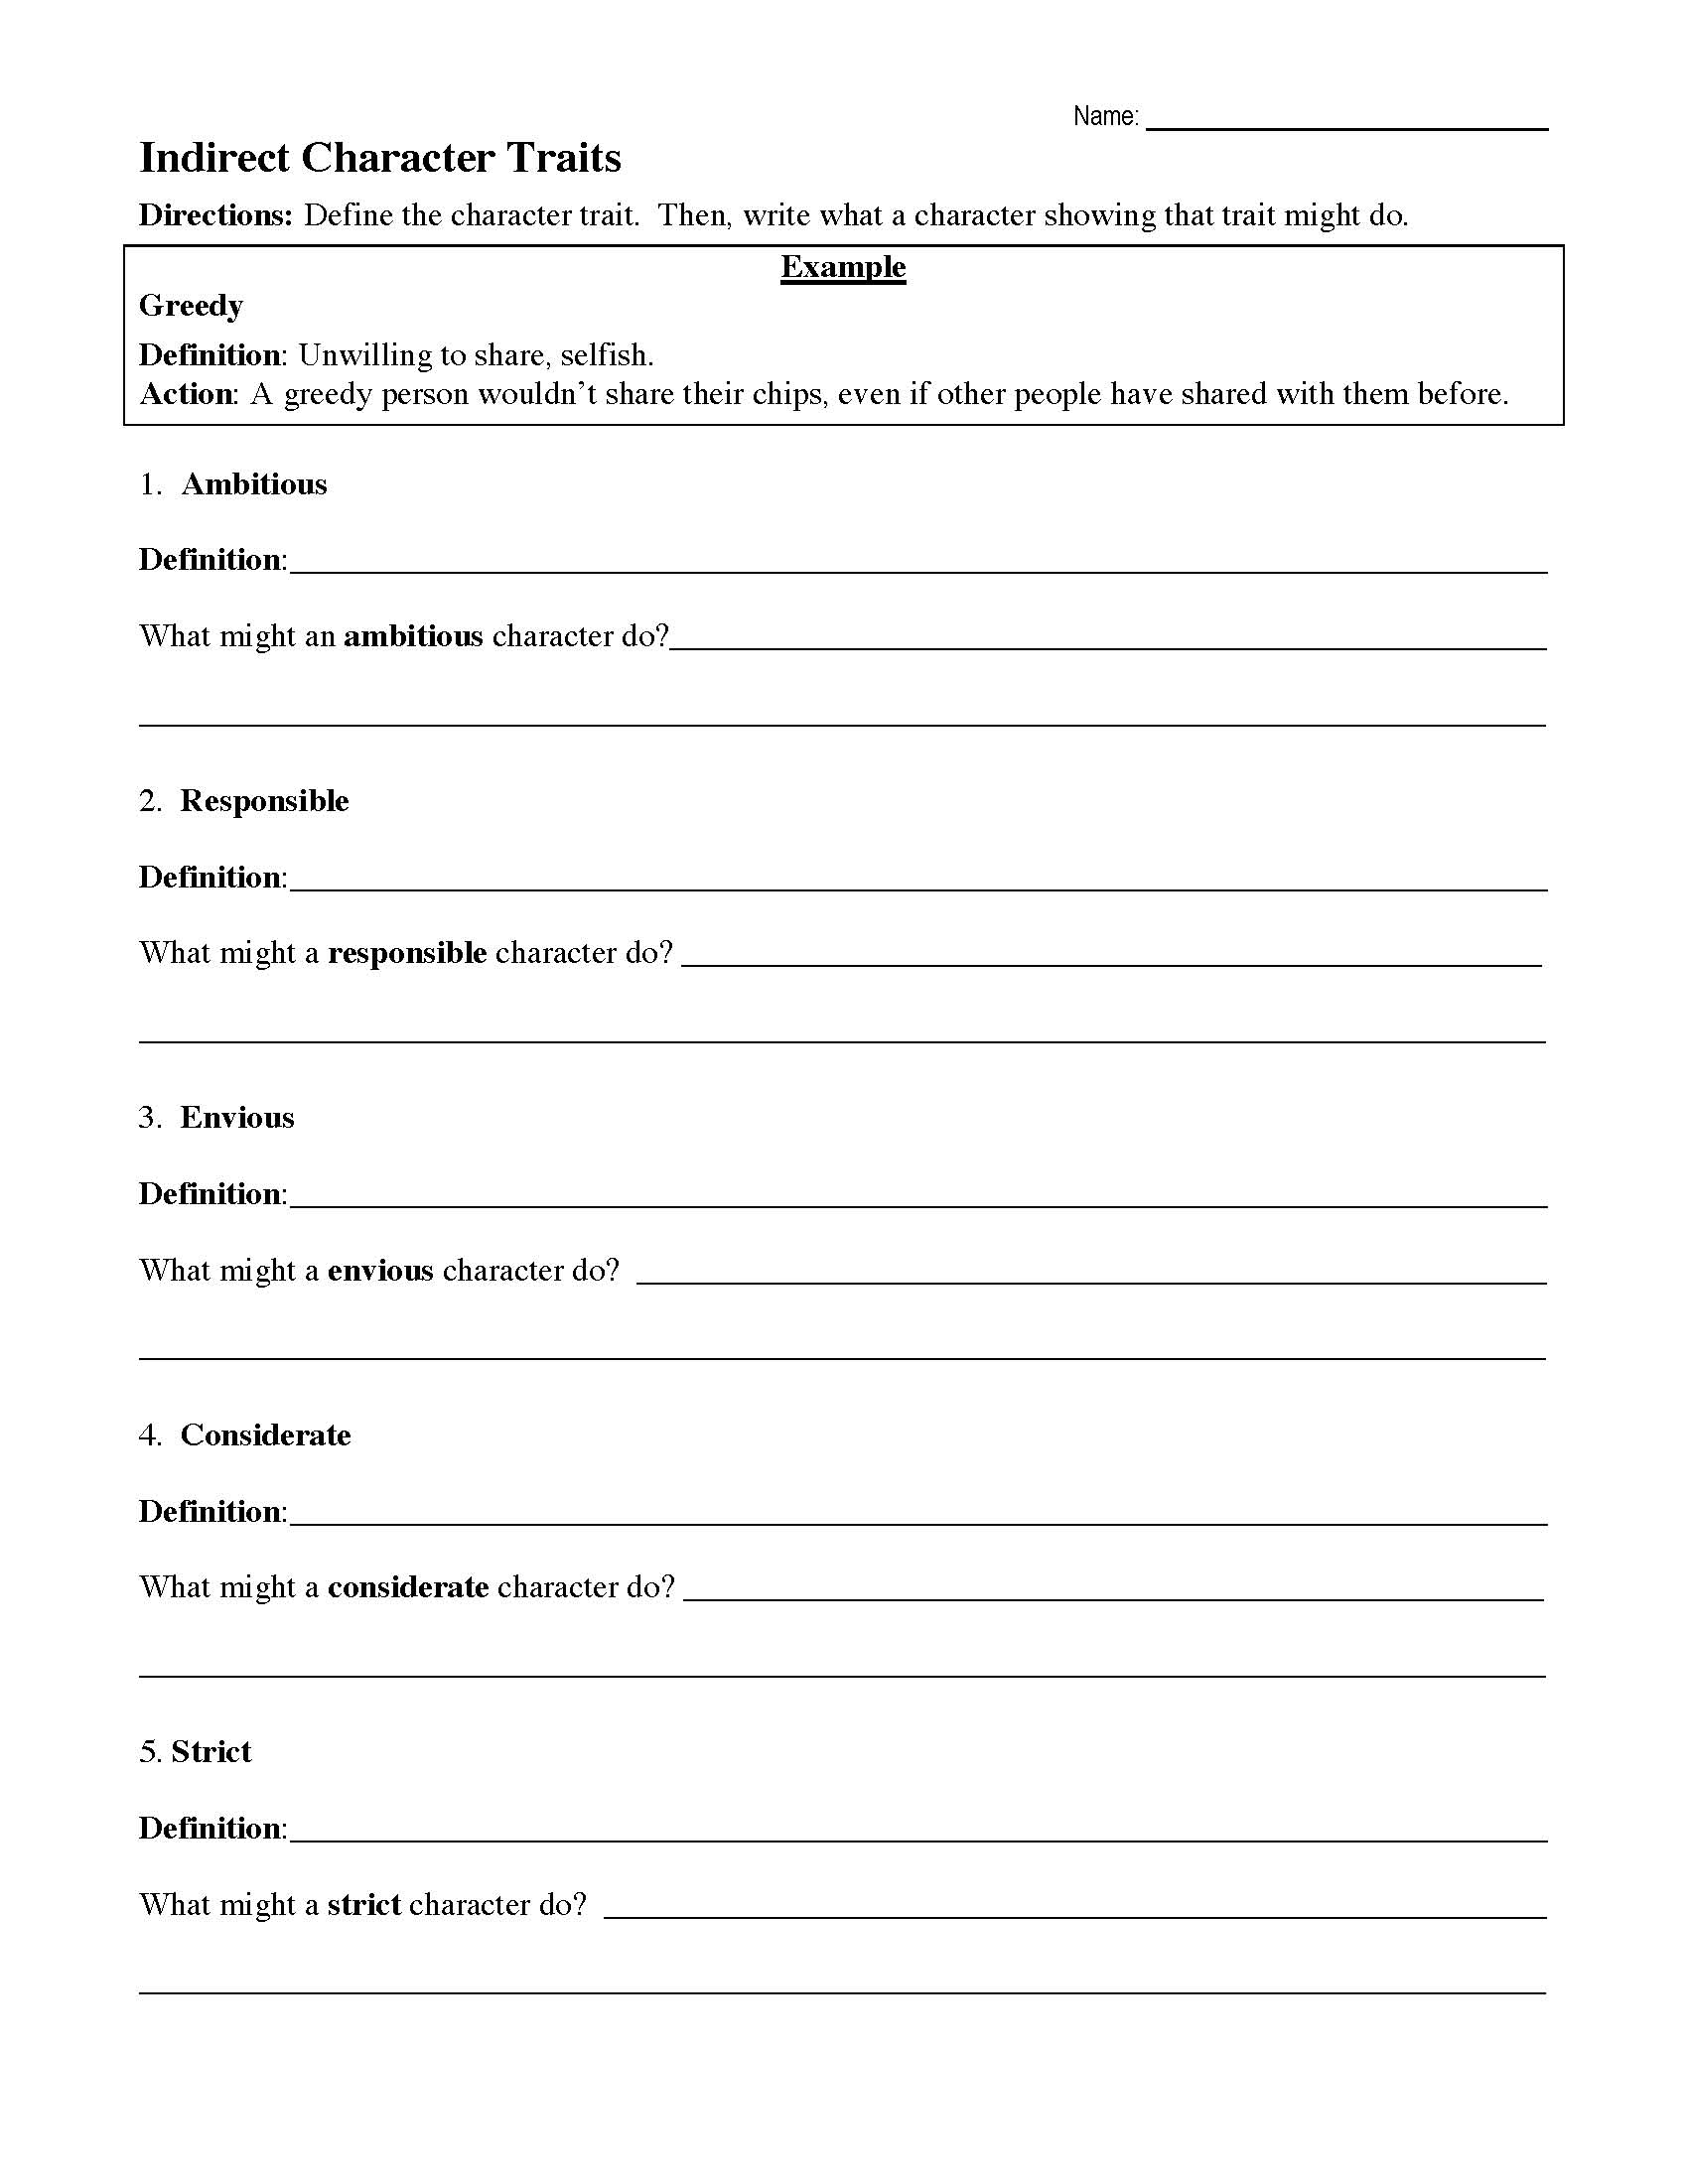 characterization-worksheets-ereading-worksheets